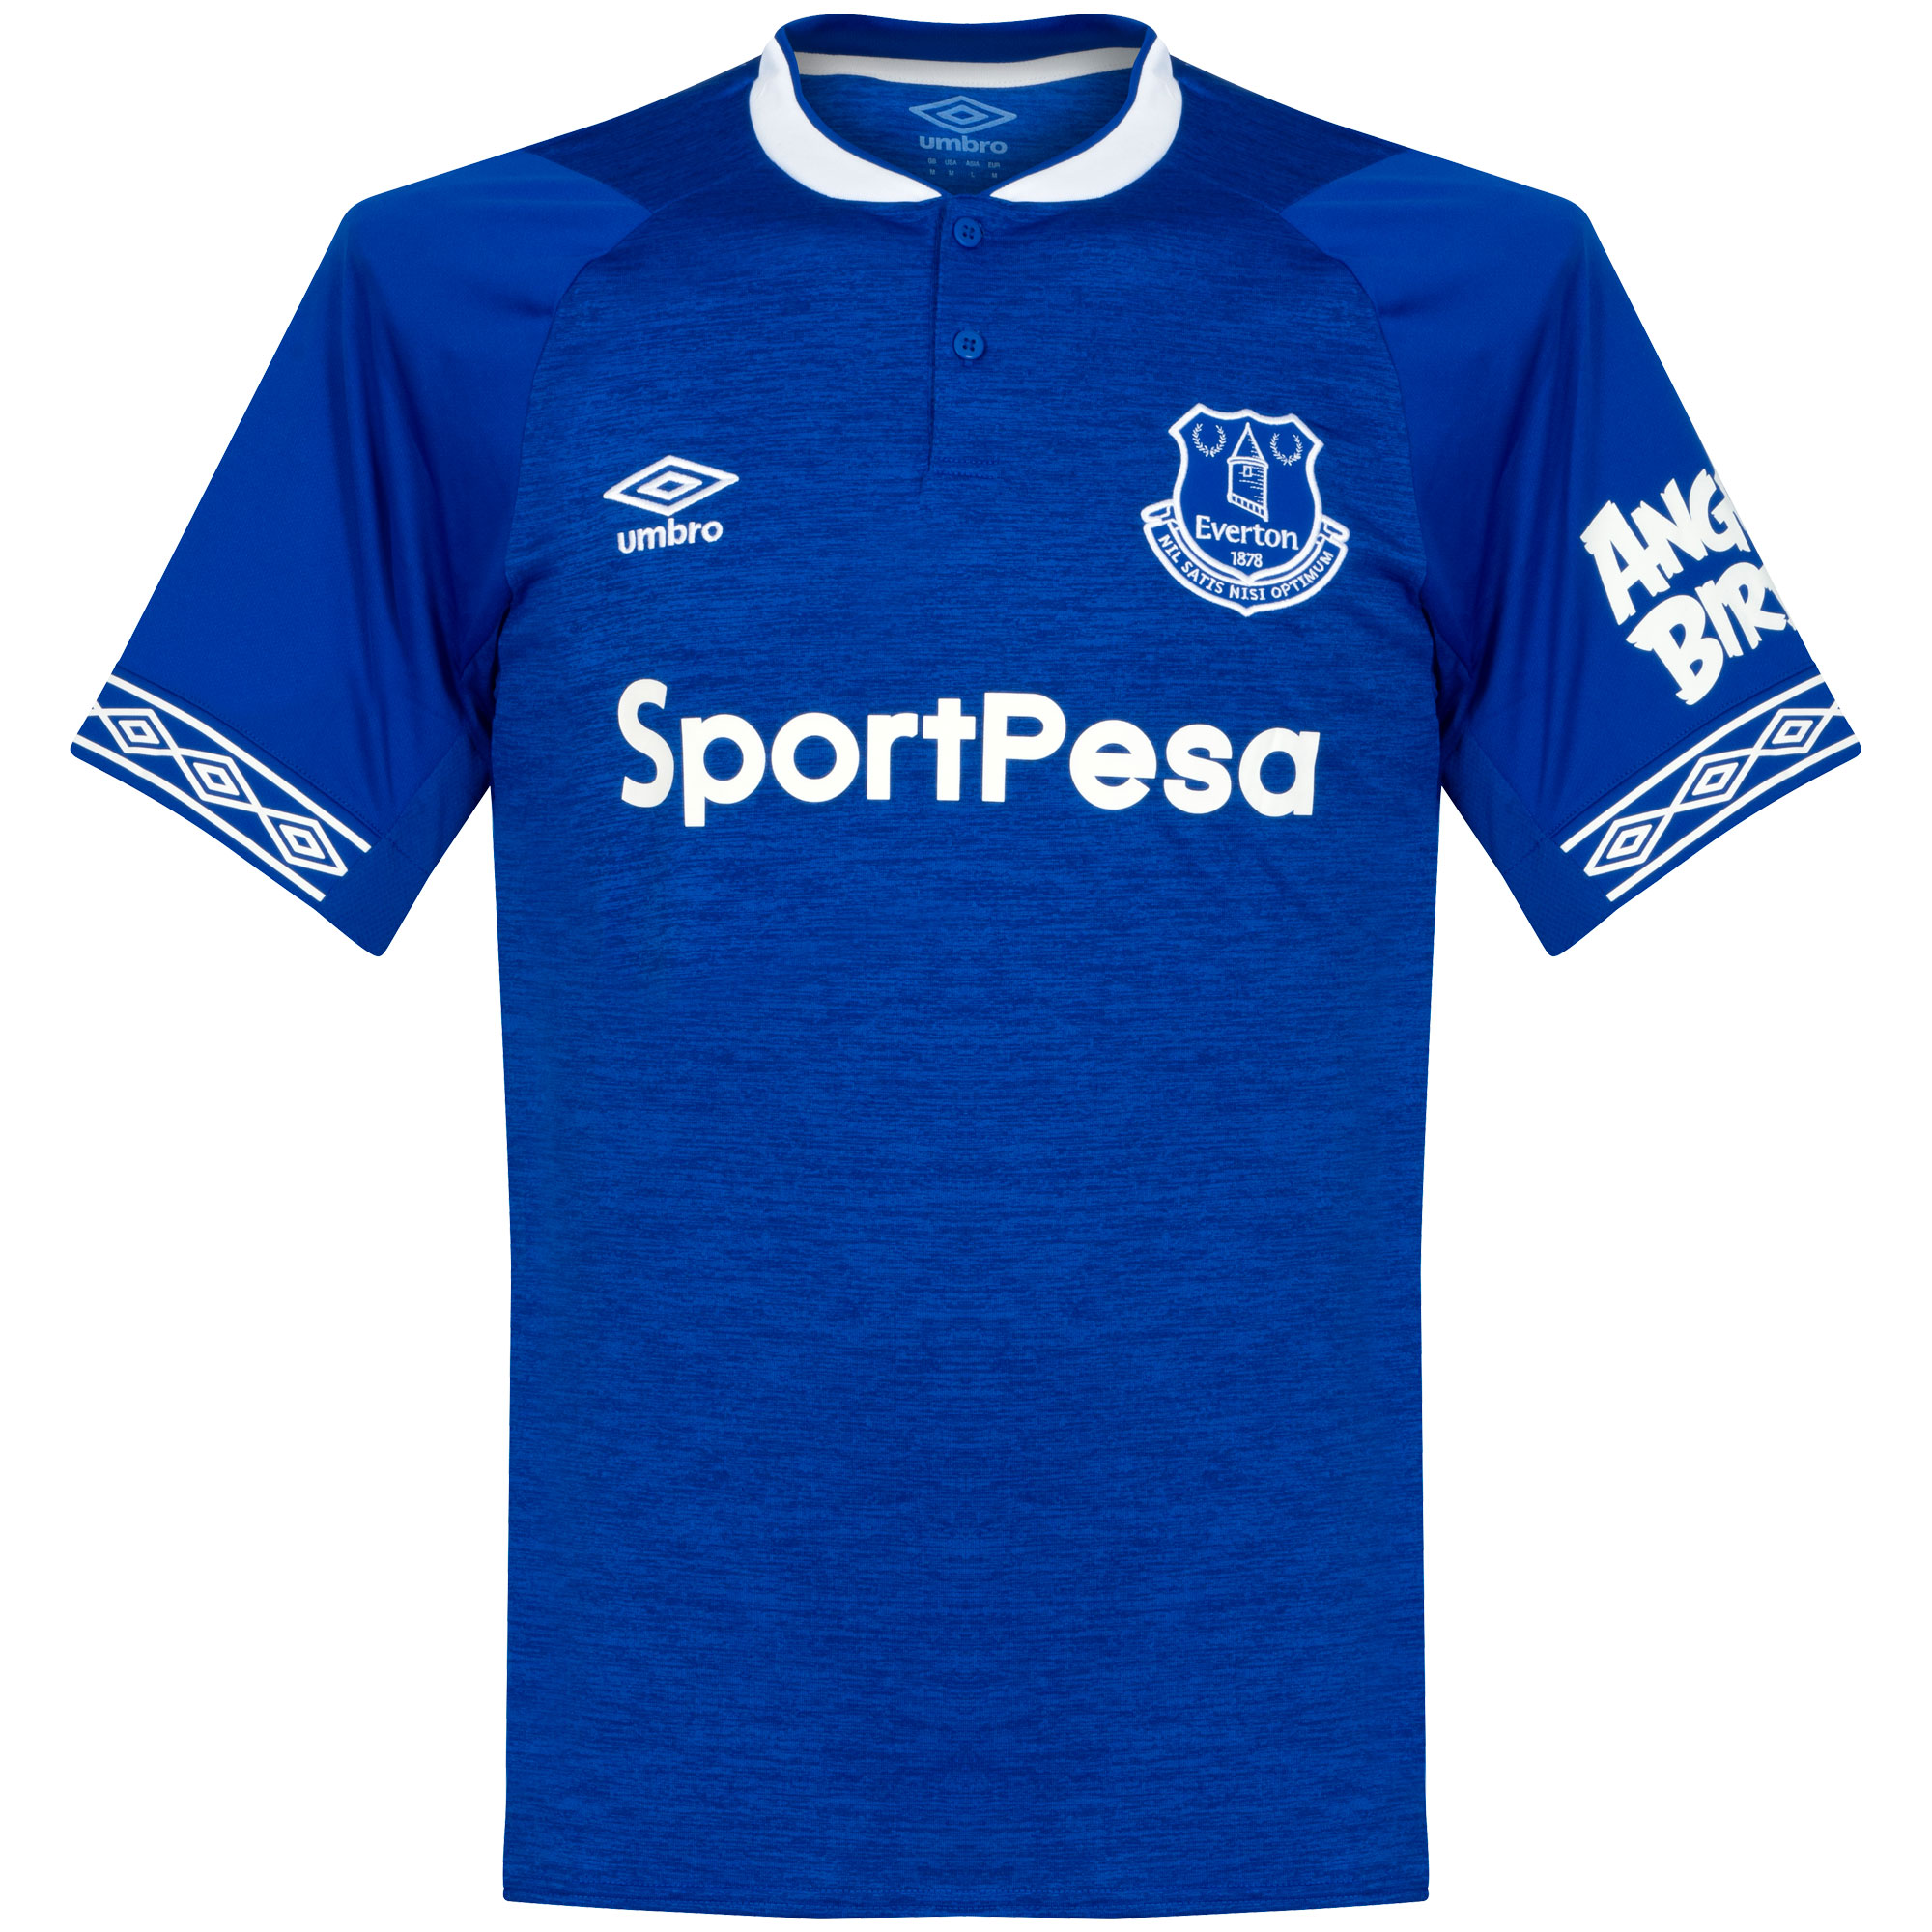 Everton Home football shirt 2013 - 2014. Sponsored by Chang